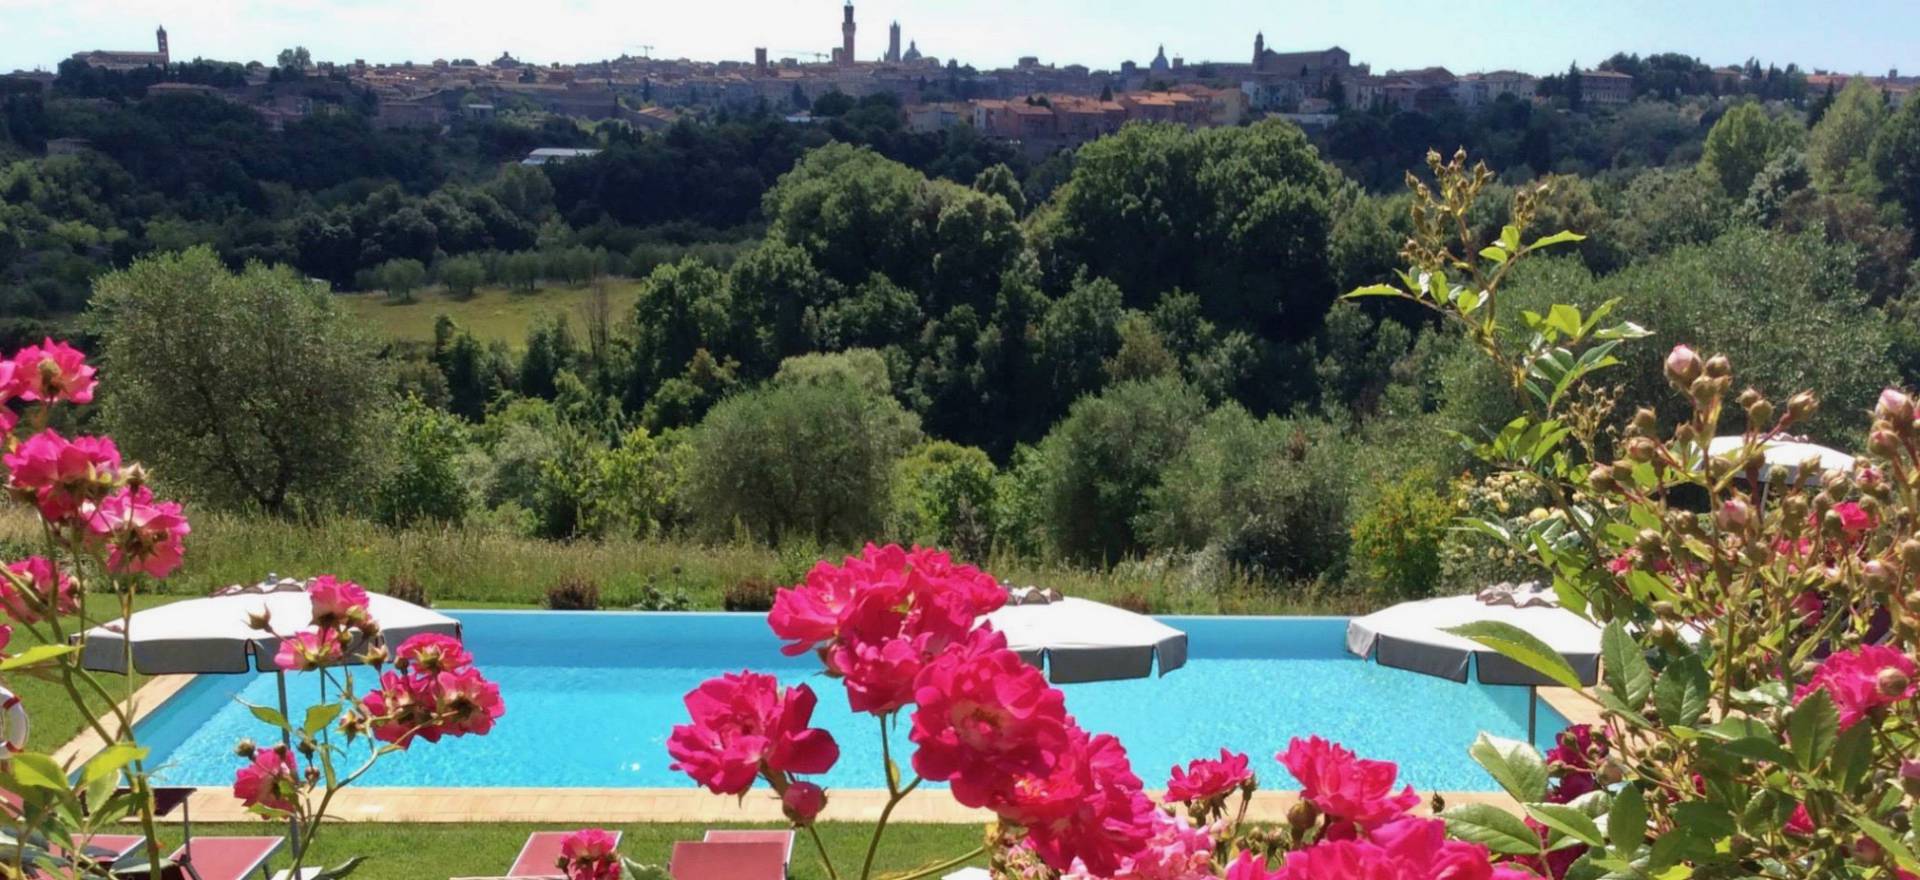 Agriturismo Toskana Urlaub in einem gemütlichen B&B - Nähe Siena | myitalyselection.de